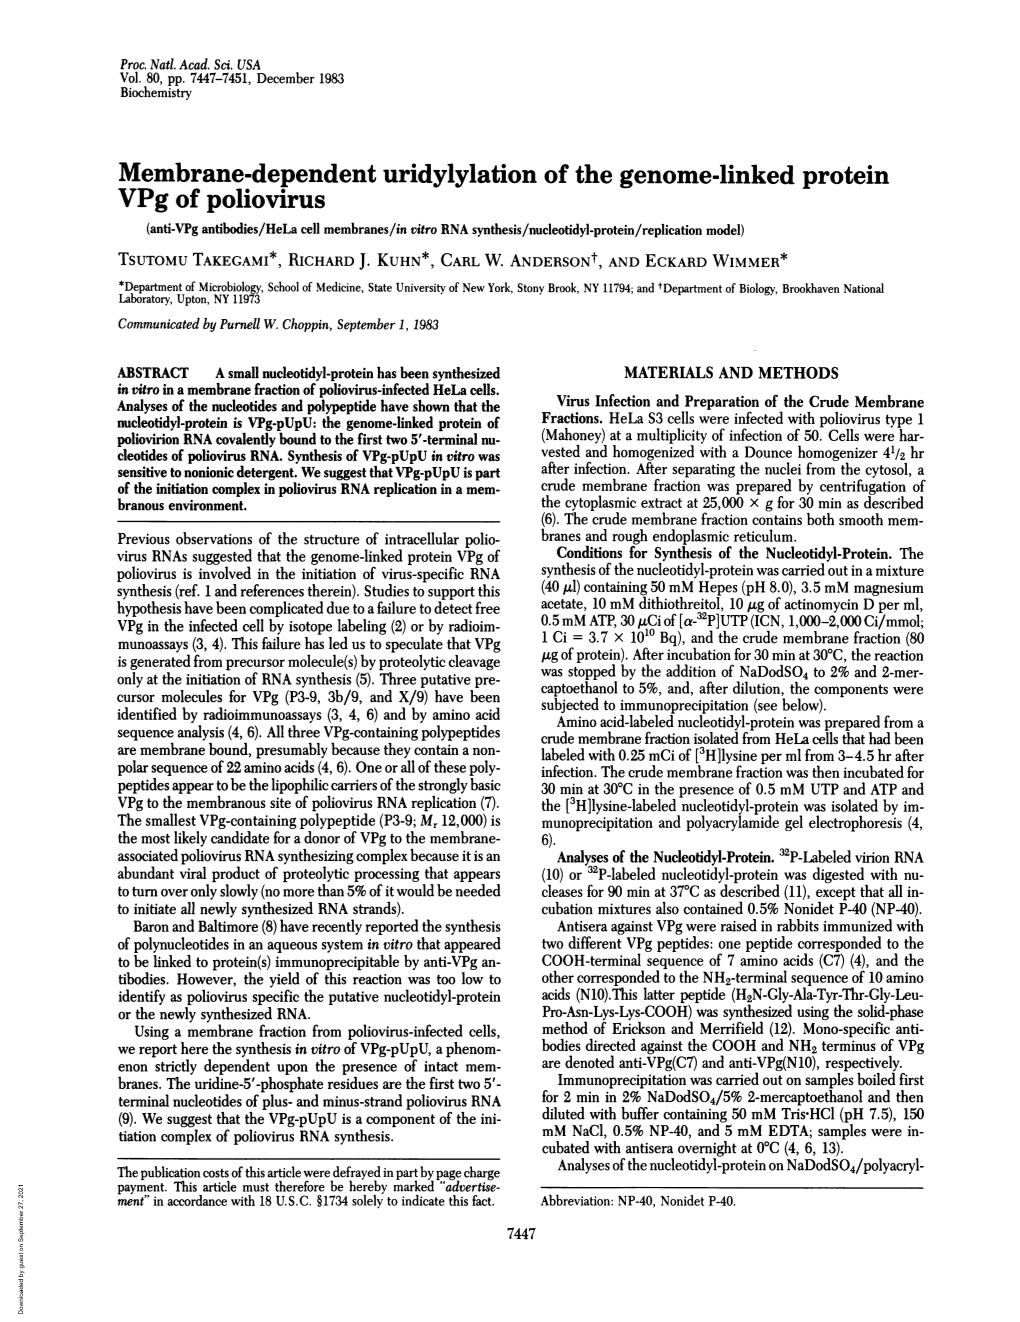 Vpg of Poliovirus (Anti-Vpg Antibodies/Hela Cell Membranes/In Vitro RNA Synthesis/Nucleotidyl-Protein/Replication Model) TSUTOMU TAKEGAMI*, RICHARD J